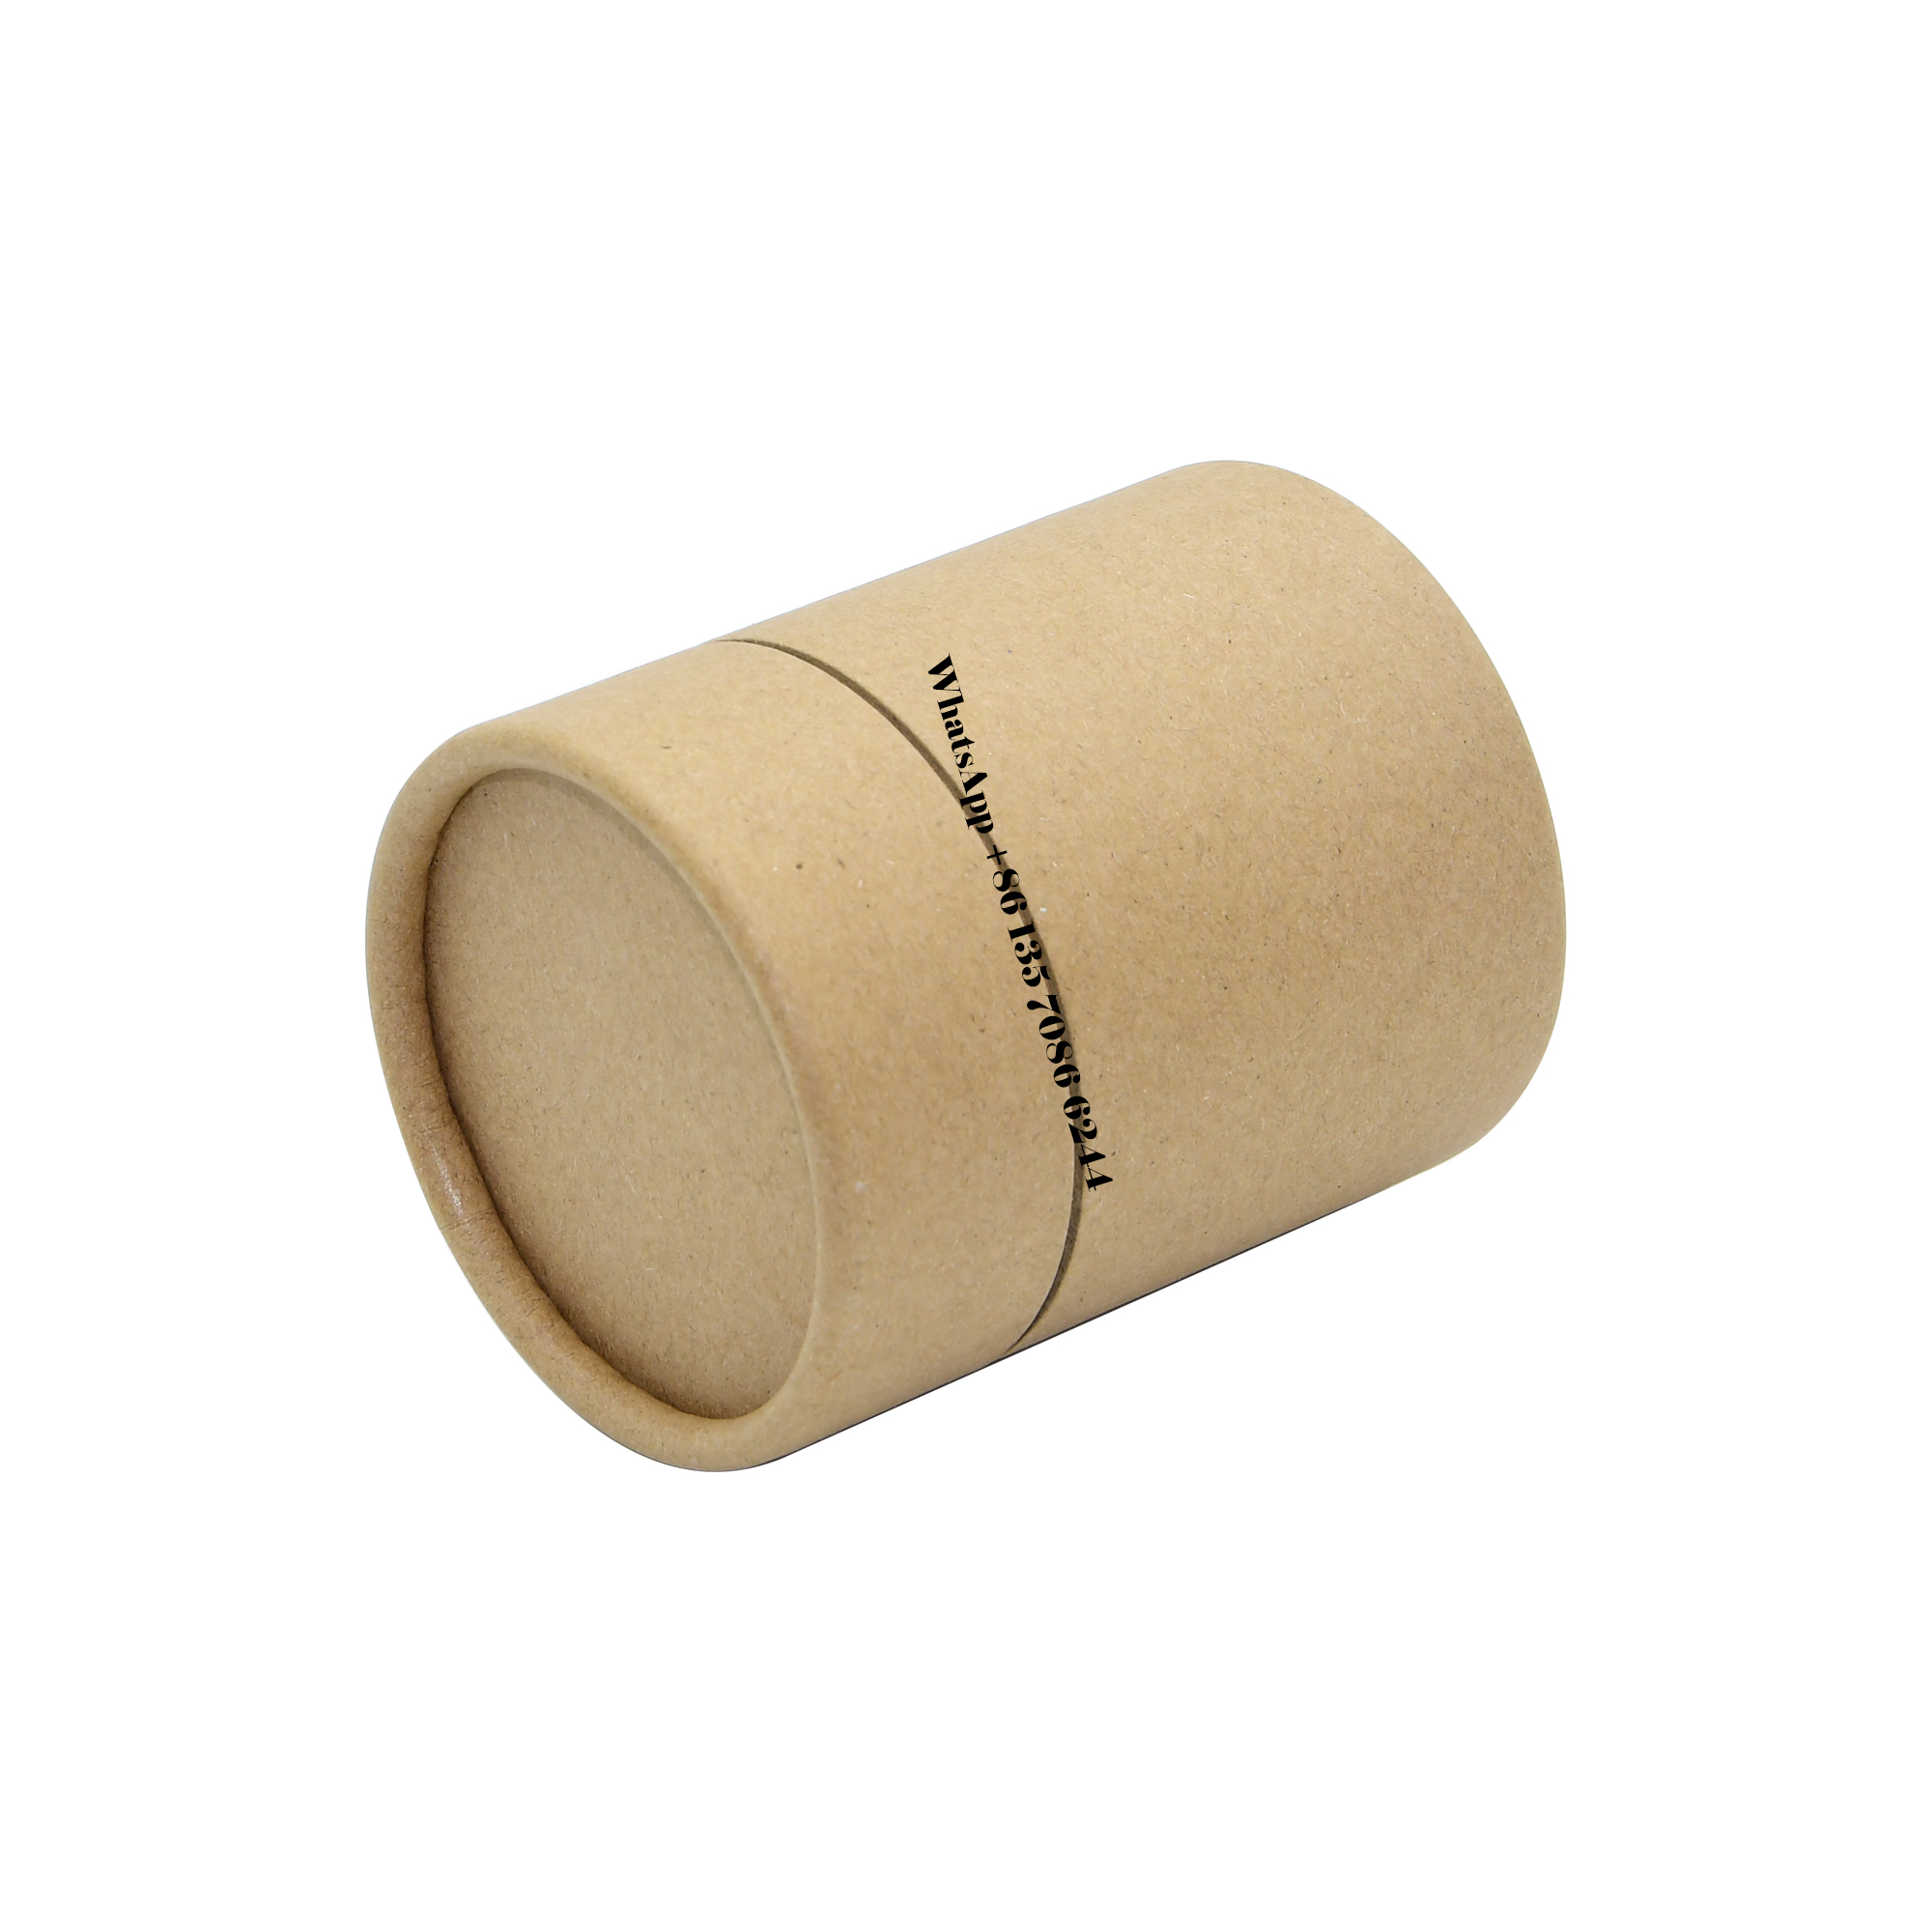  Premium Crafted Kraft Paper Loose Tea Packaging Tube Boxes  